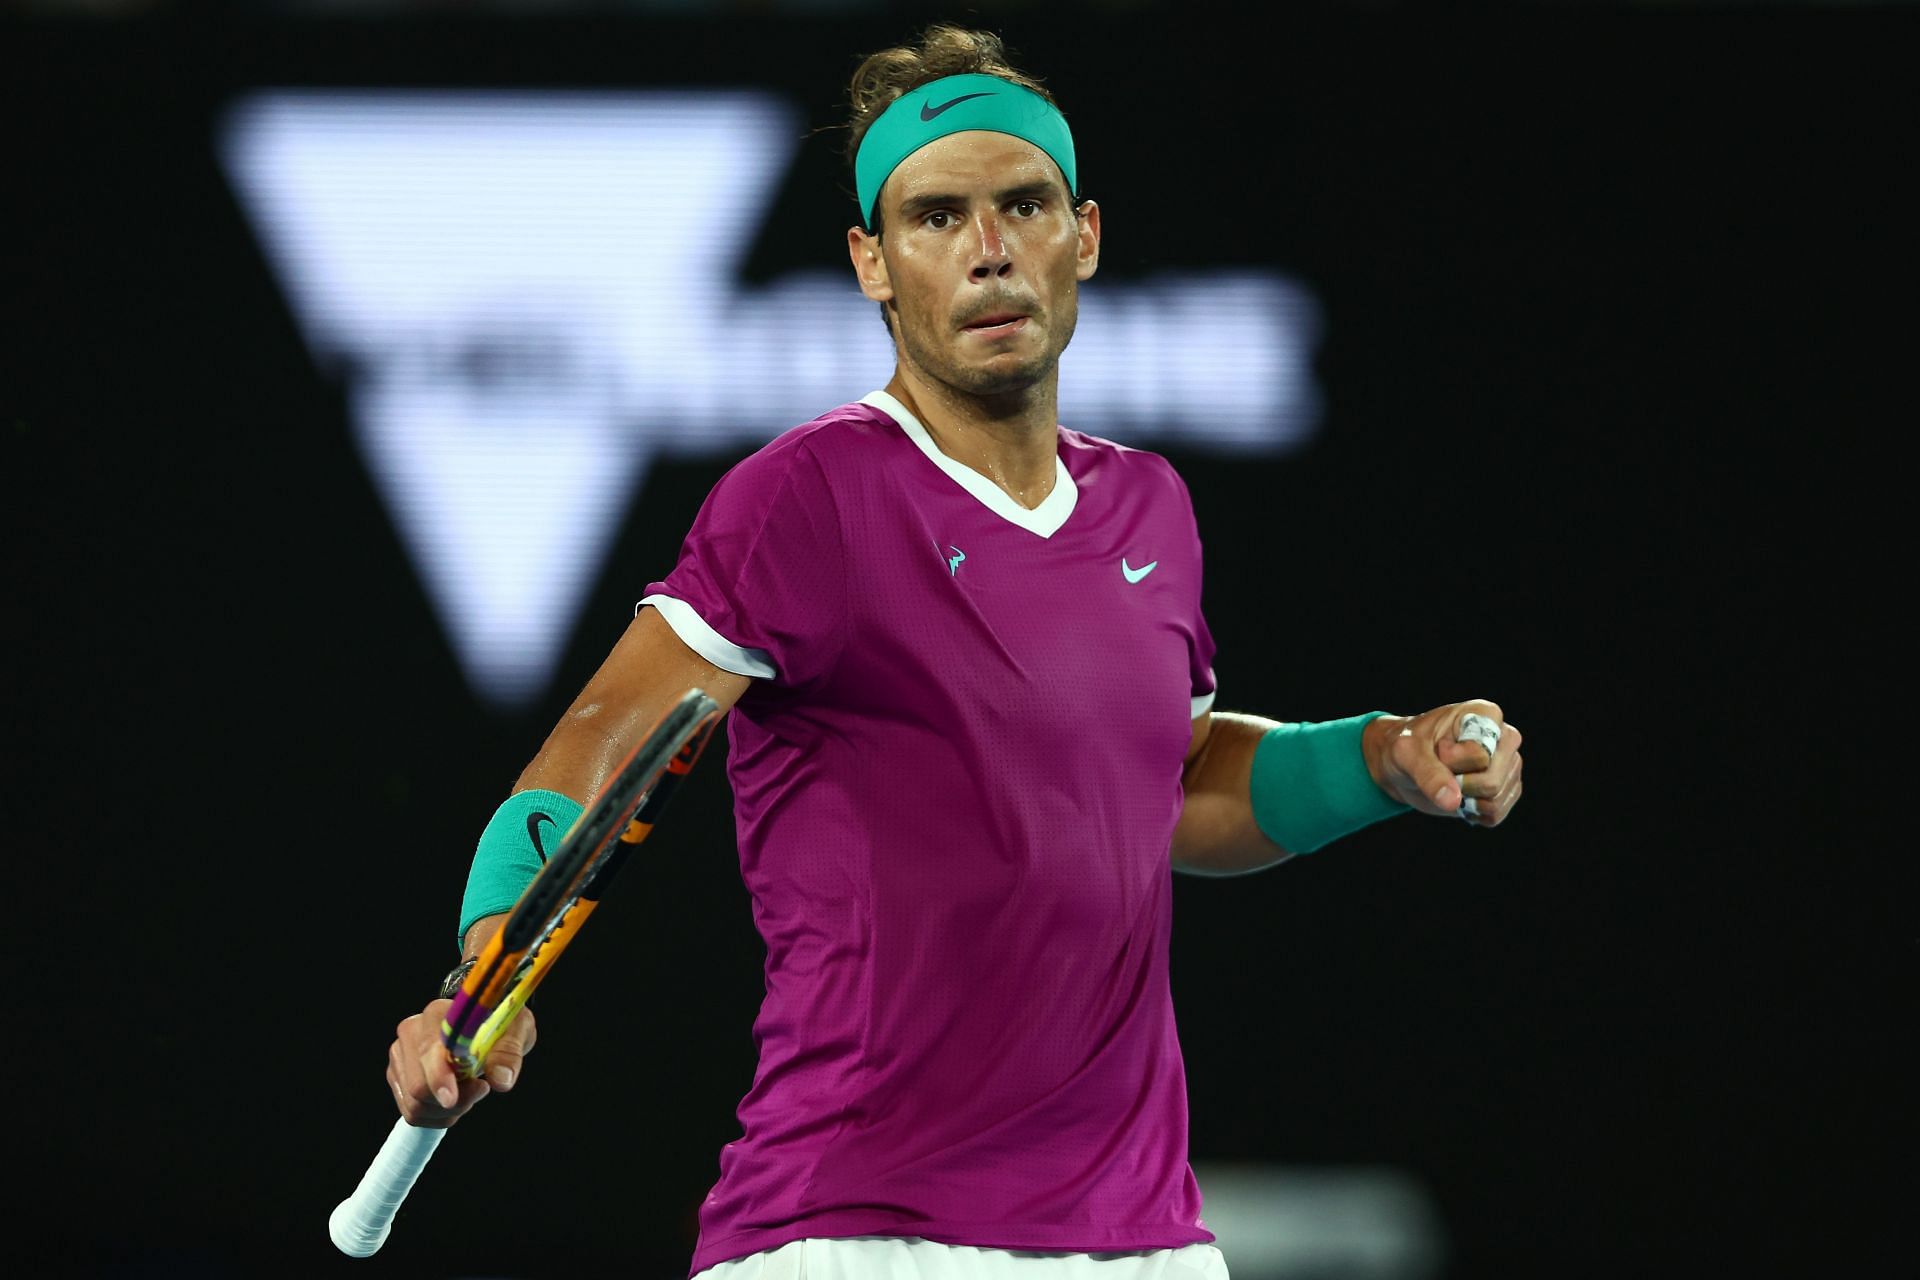 Iga Swiatek hoped Nadal could win his 21st Grand Slam at the 2022 Australian Open